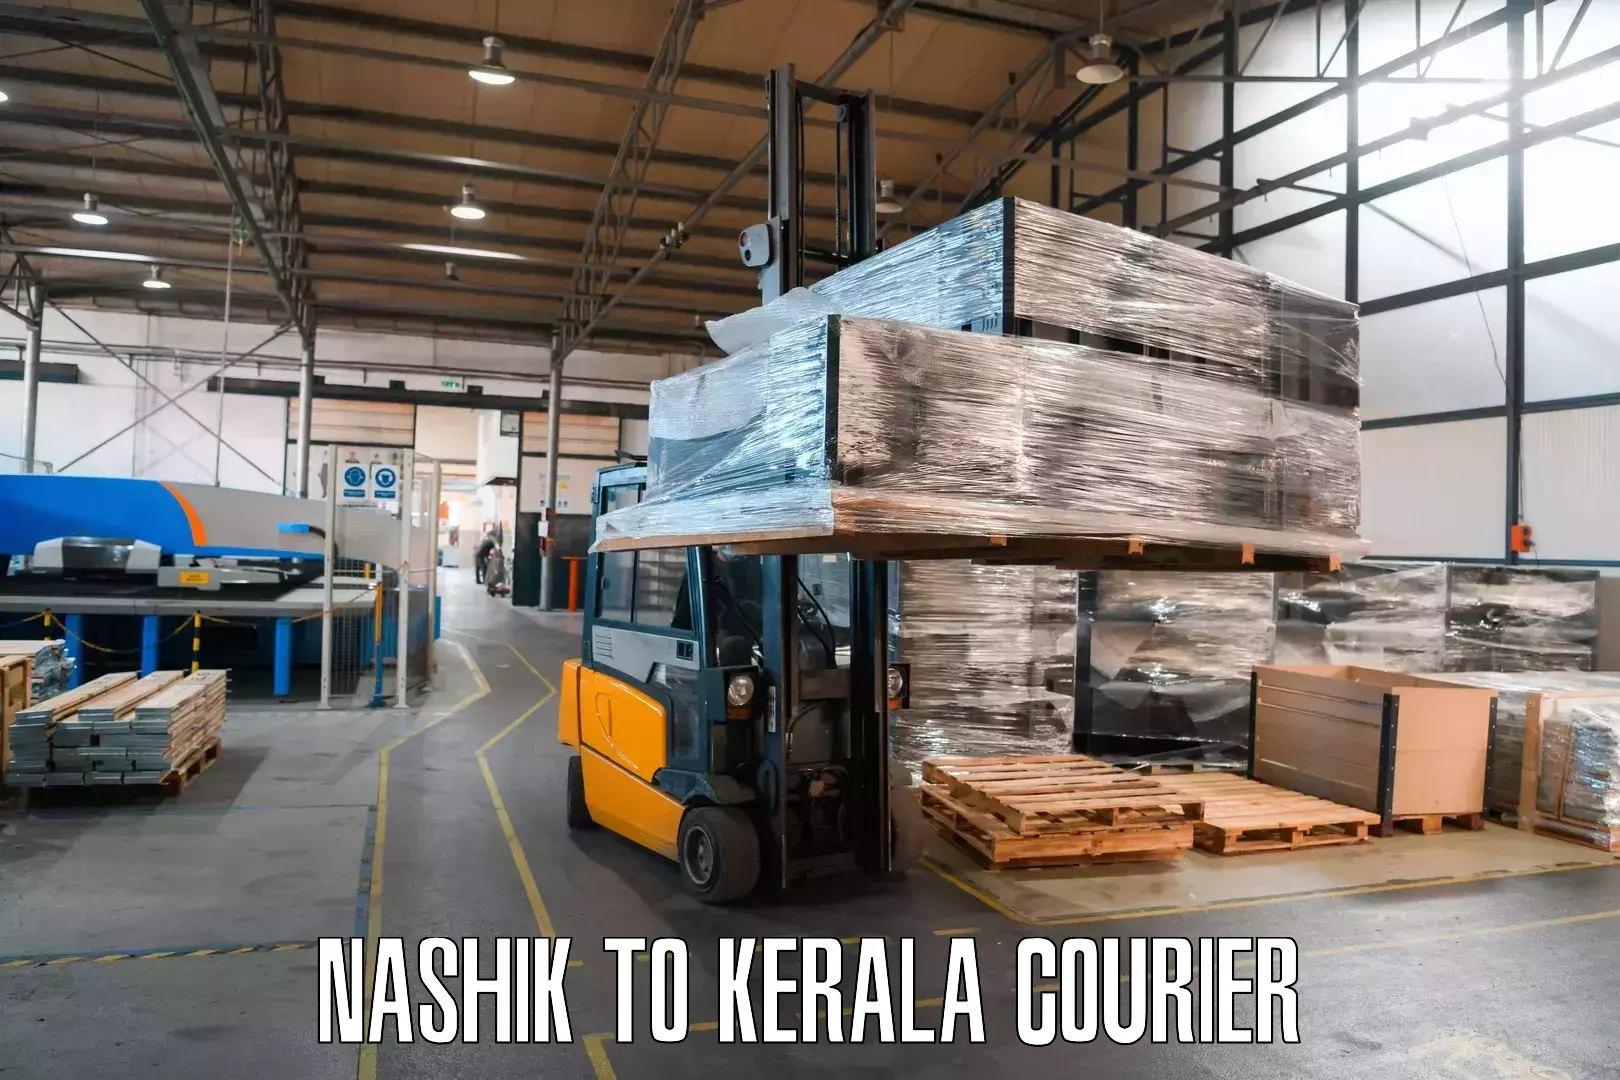 Courier service innovation Nashik to Kannur